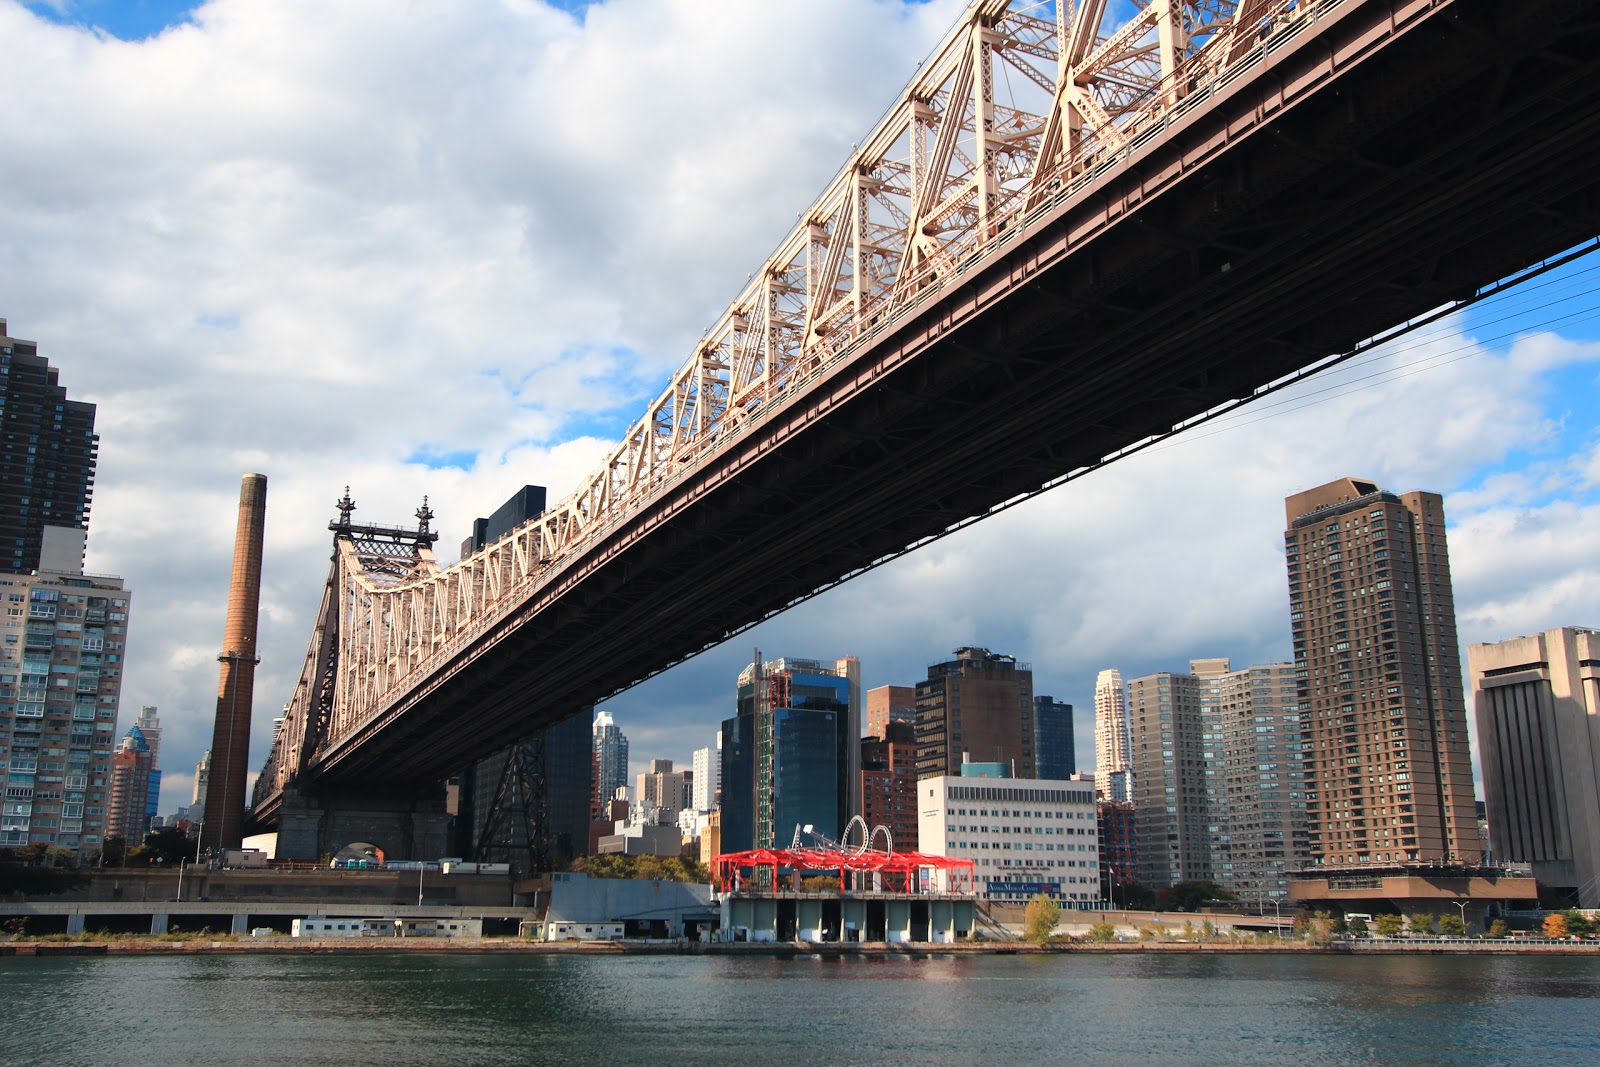 Photo of Ed Koch Queensboro Bridge in New York City, New York, United States - 9 Picture of Point of interest, Establishment